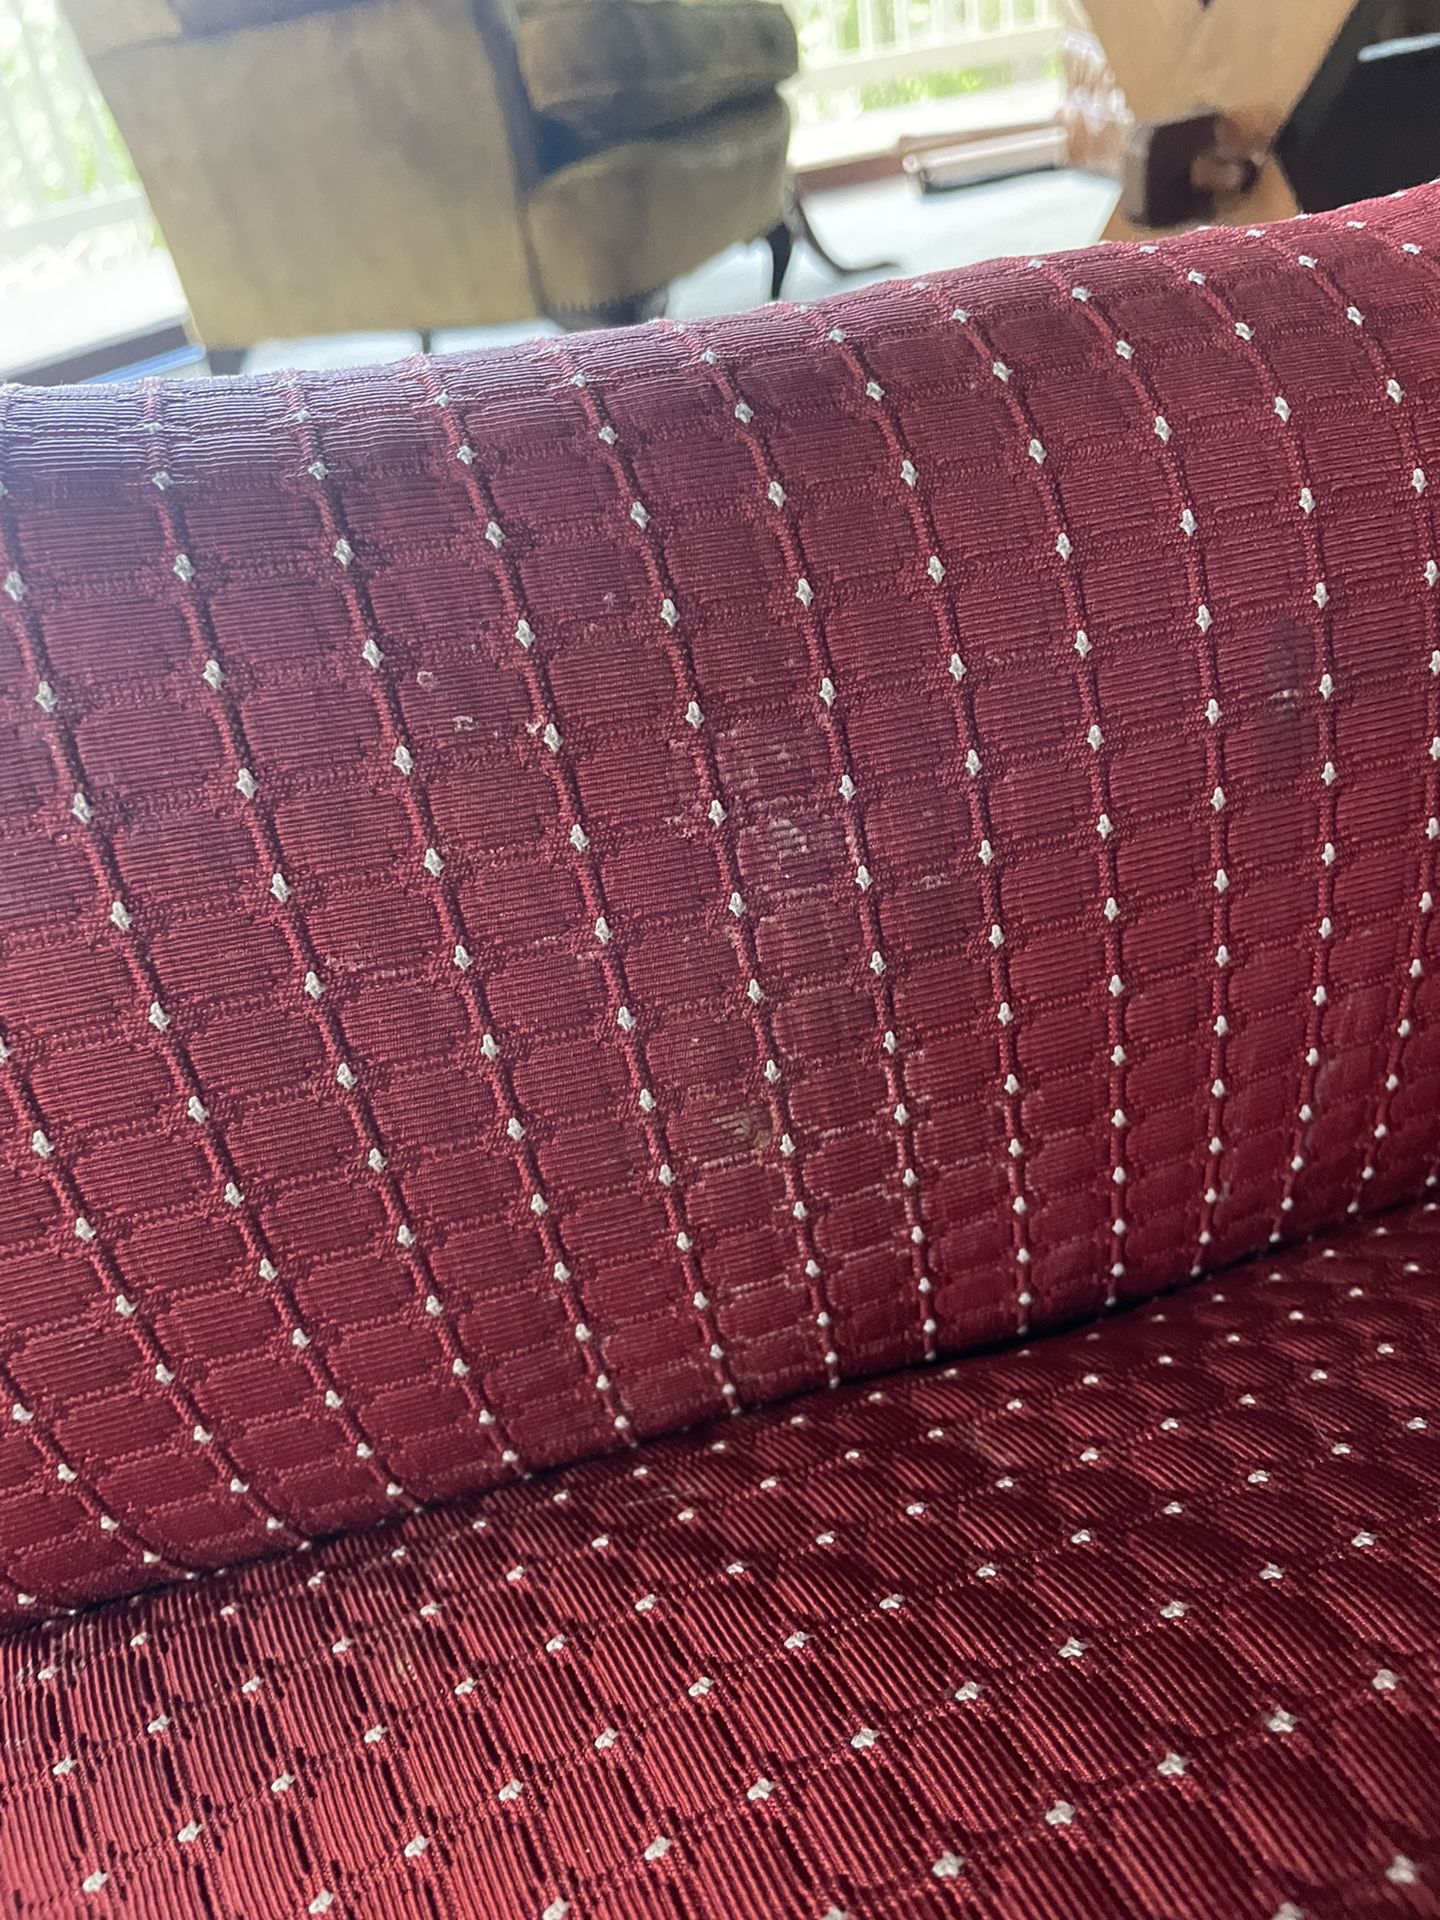 Red Fabric Sofa 